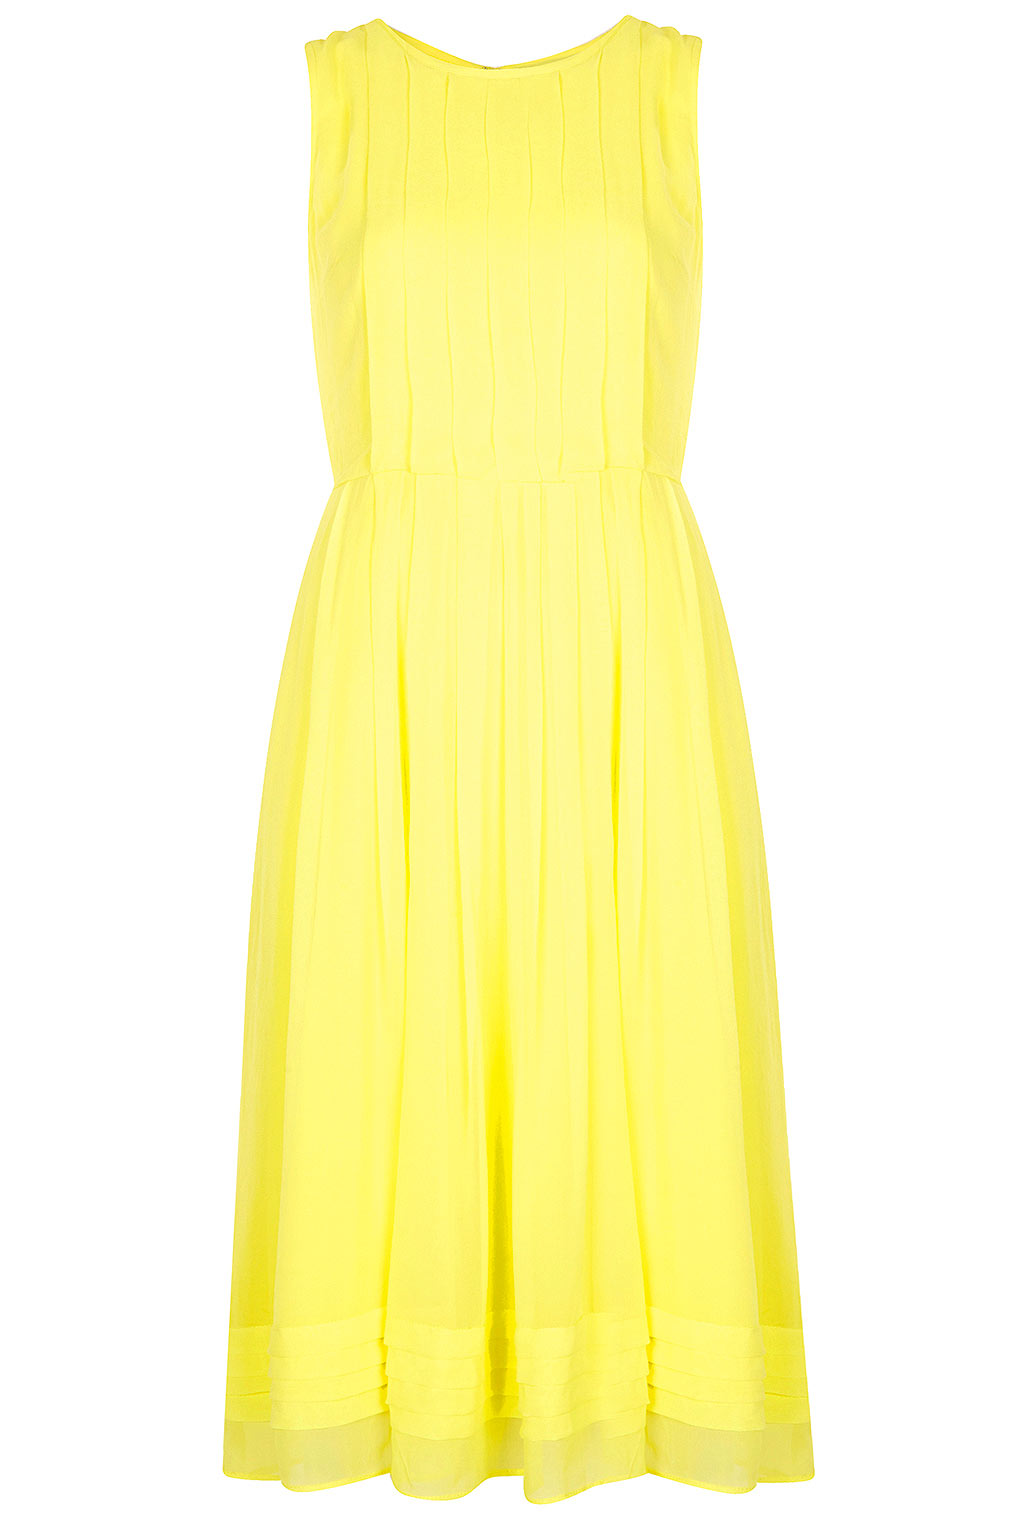 Topshop Poppy Midi Dress in Yellow